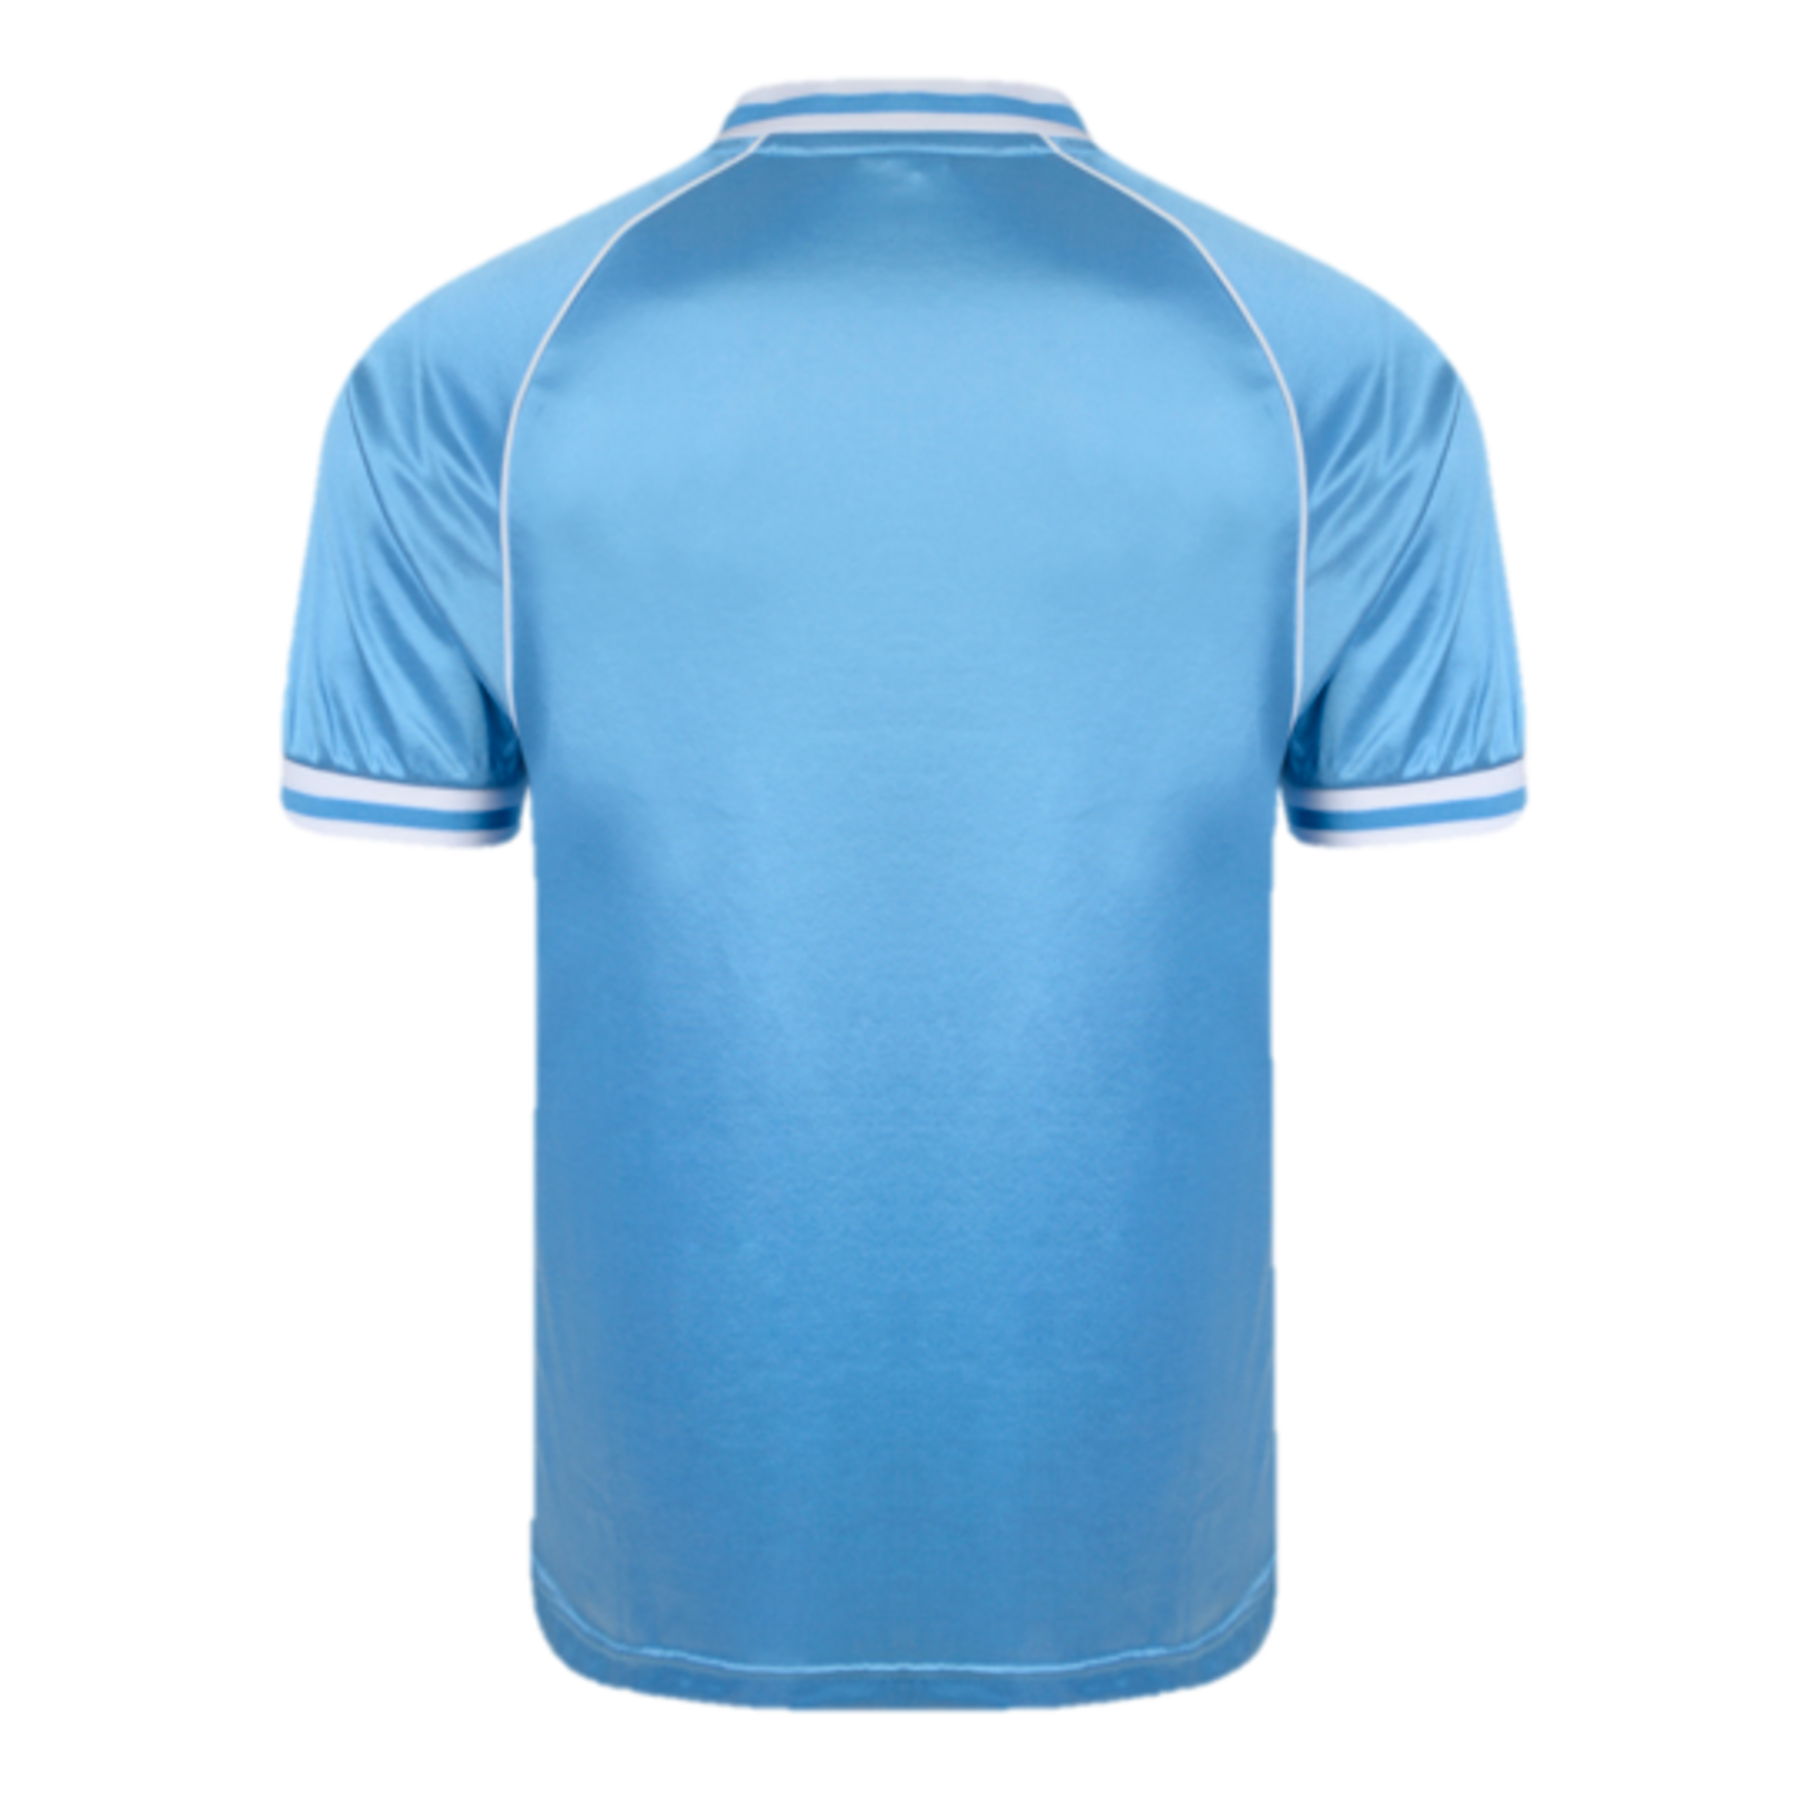 Manchester City FC Official Football Gift Mens 1982 Home Kit Retro Shirt 